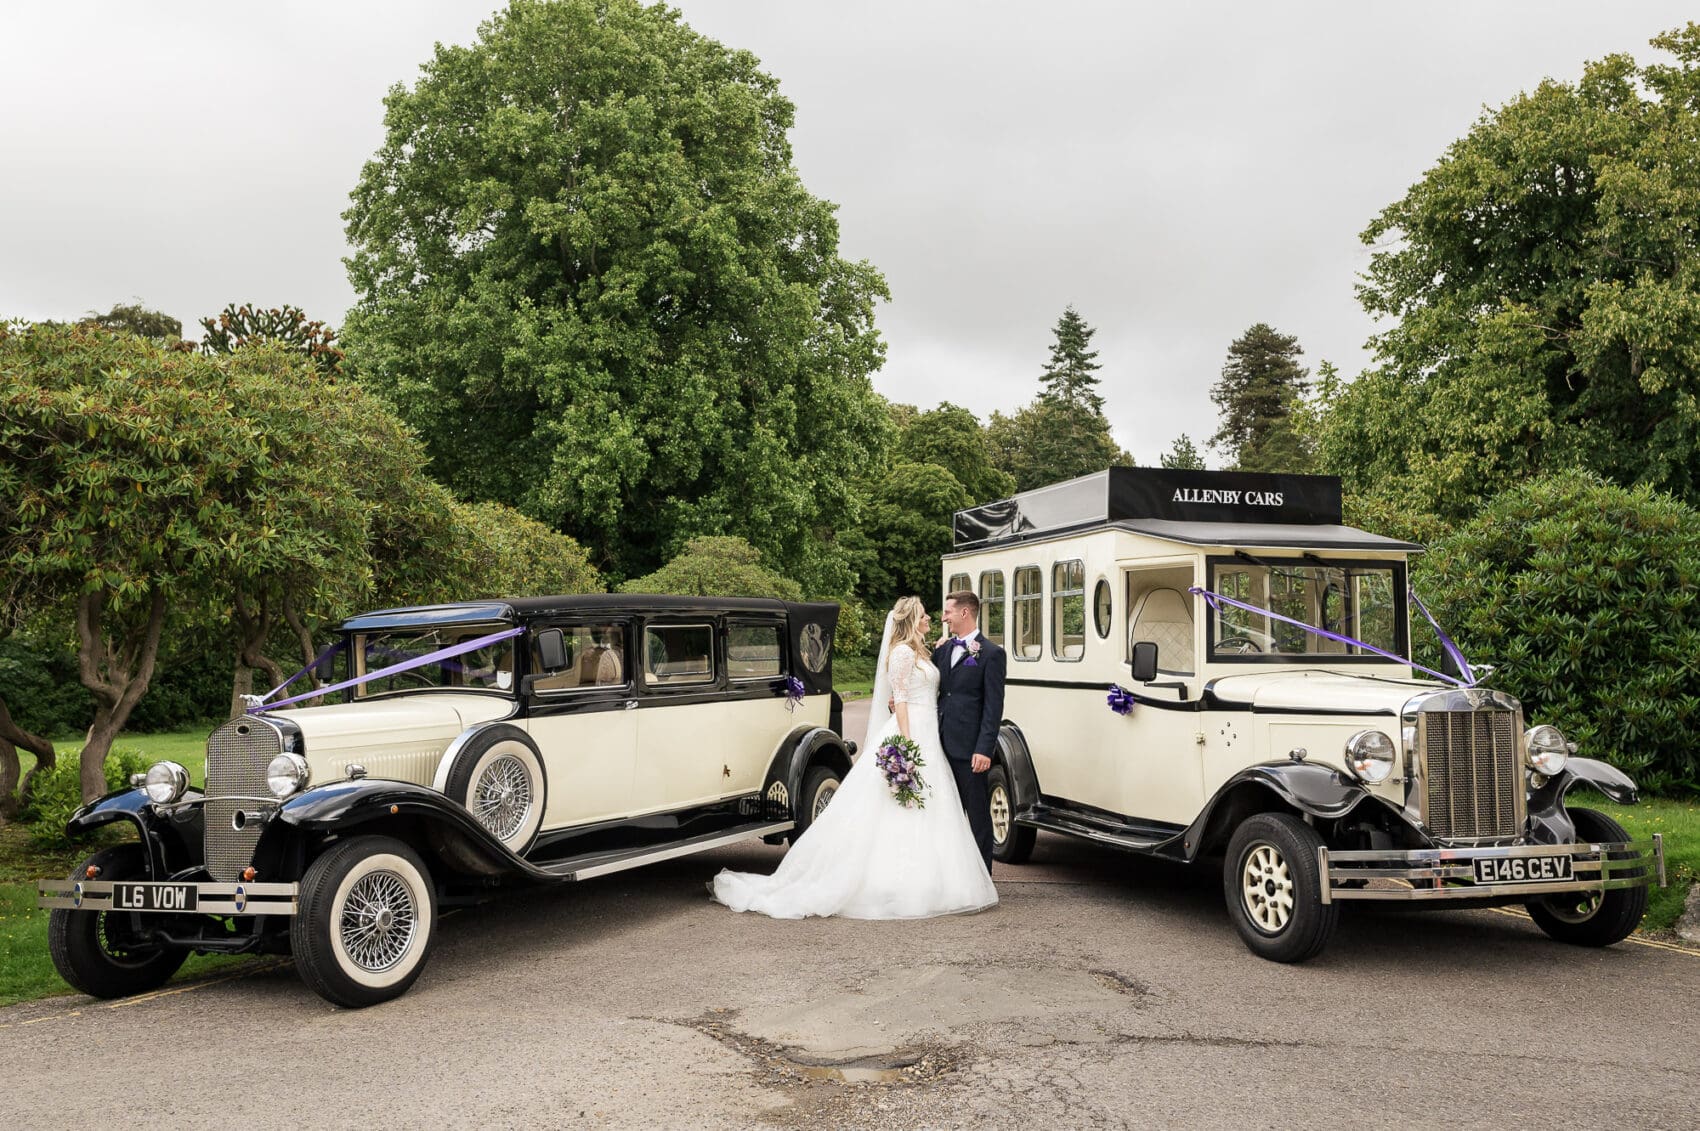 Allenby wedding cars at Chilworth Manor Hotel wedding